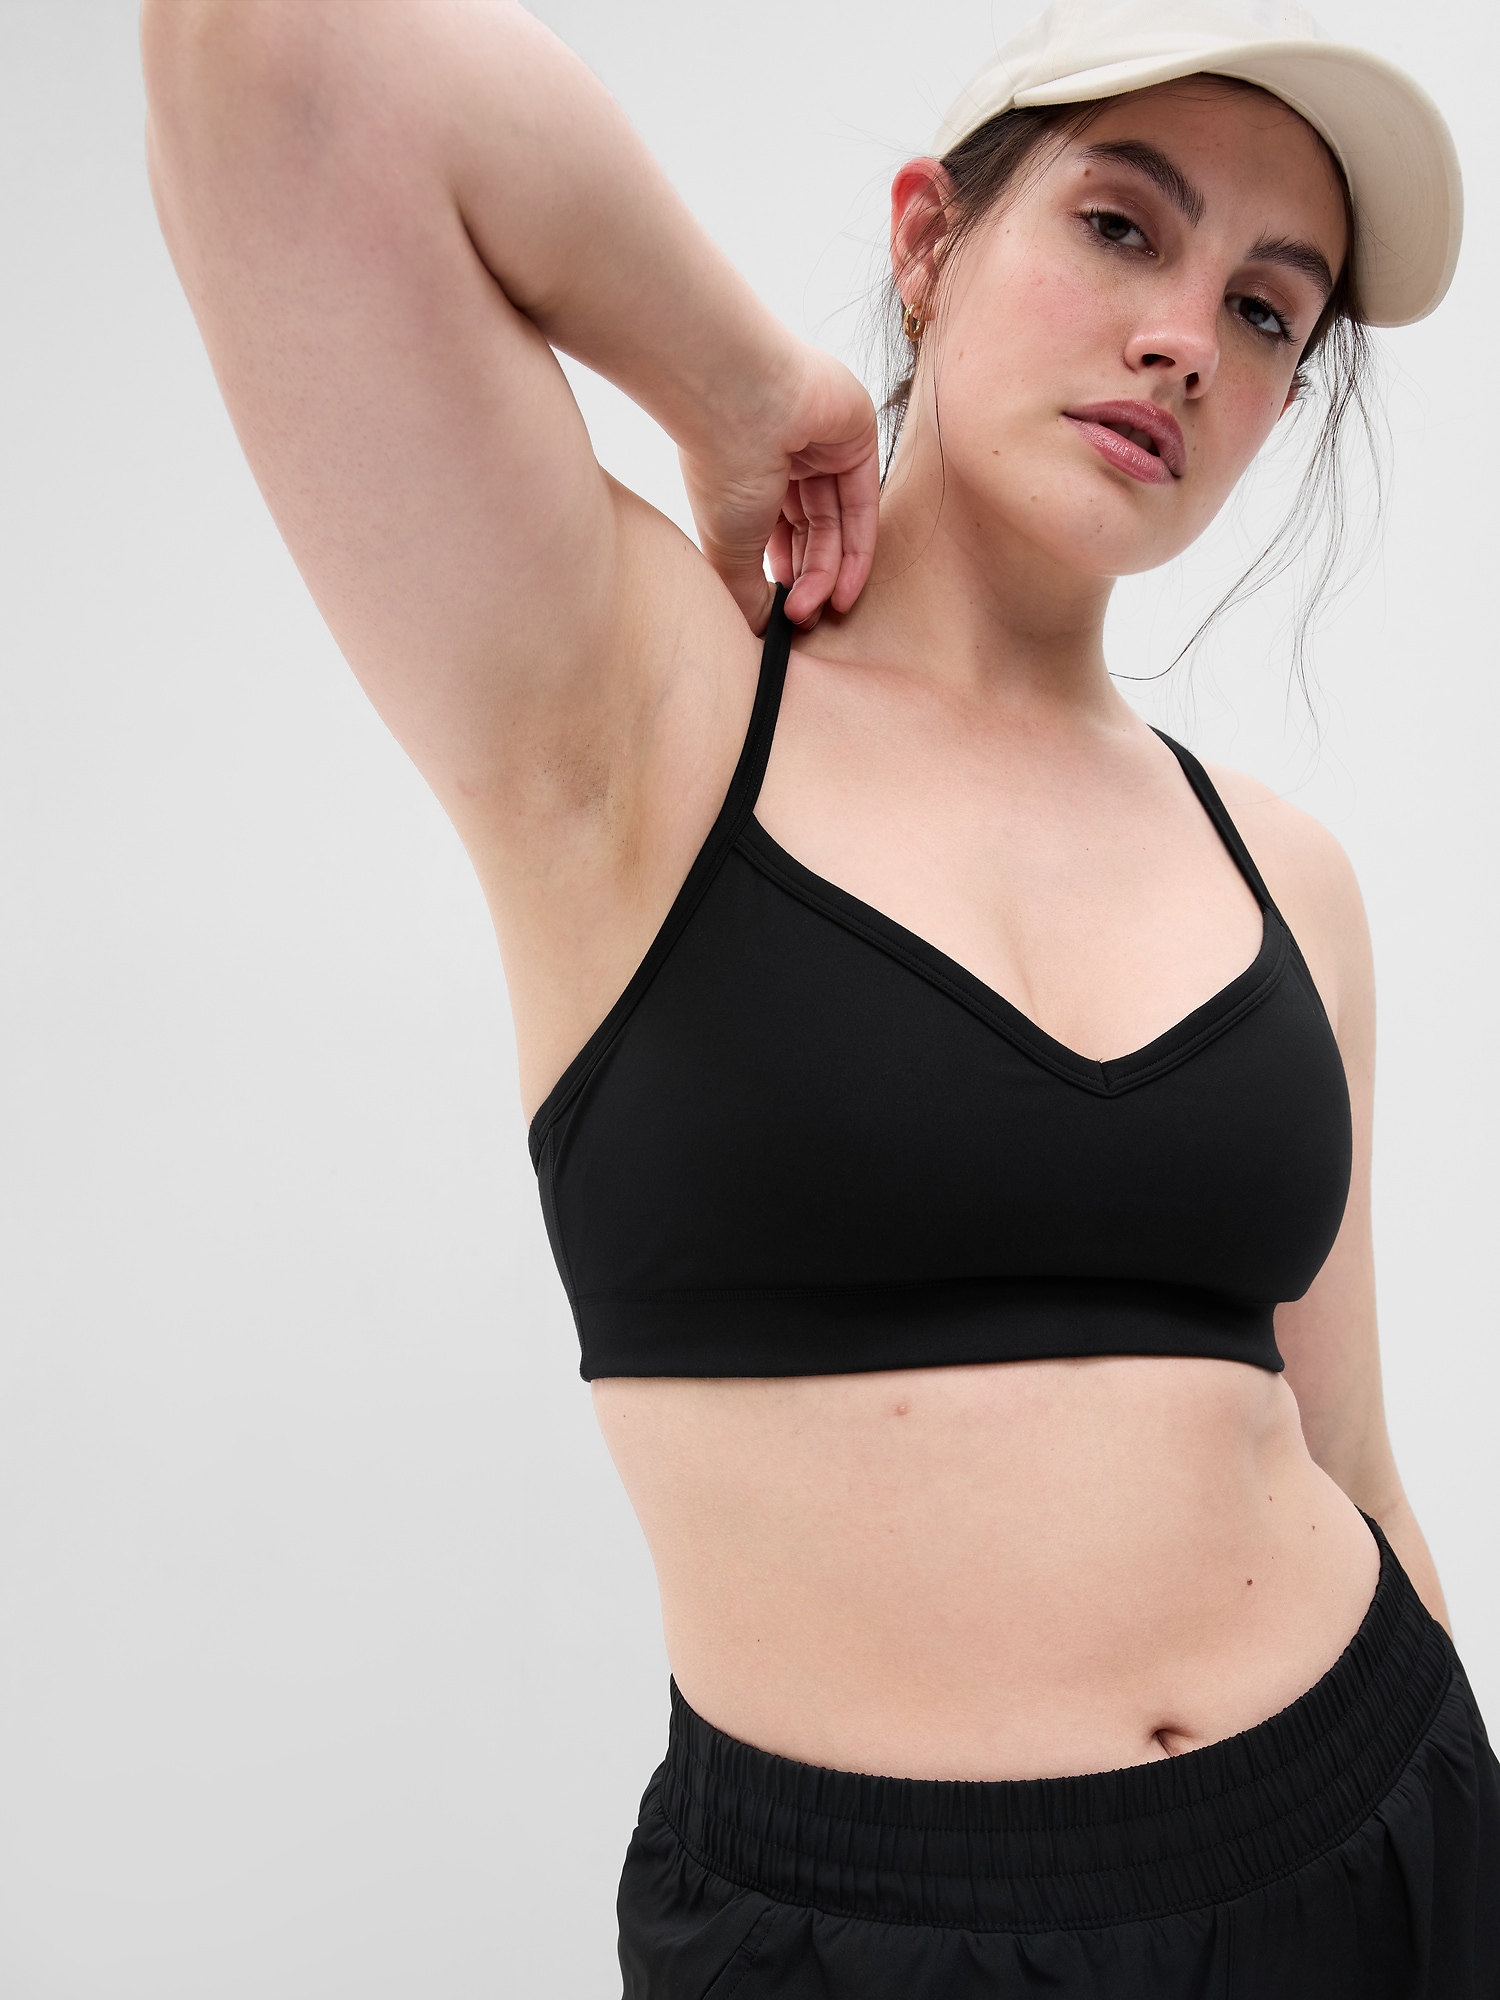 GAP Woman's Optical White Sports bra with double straps